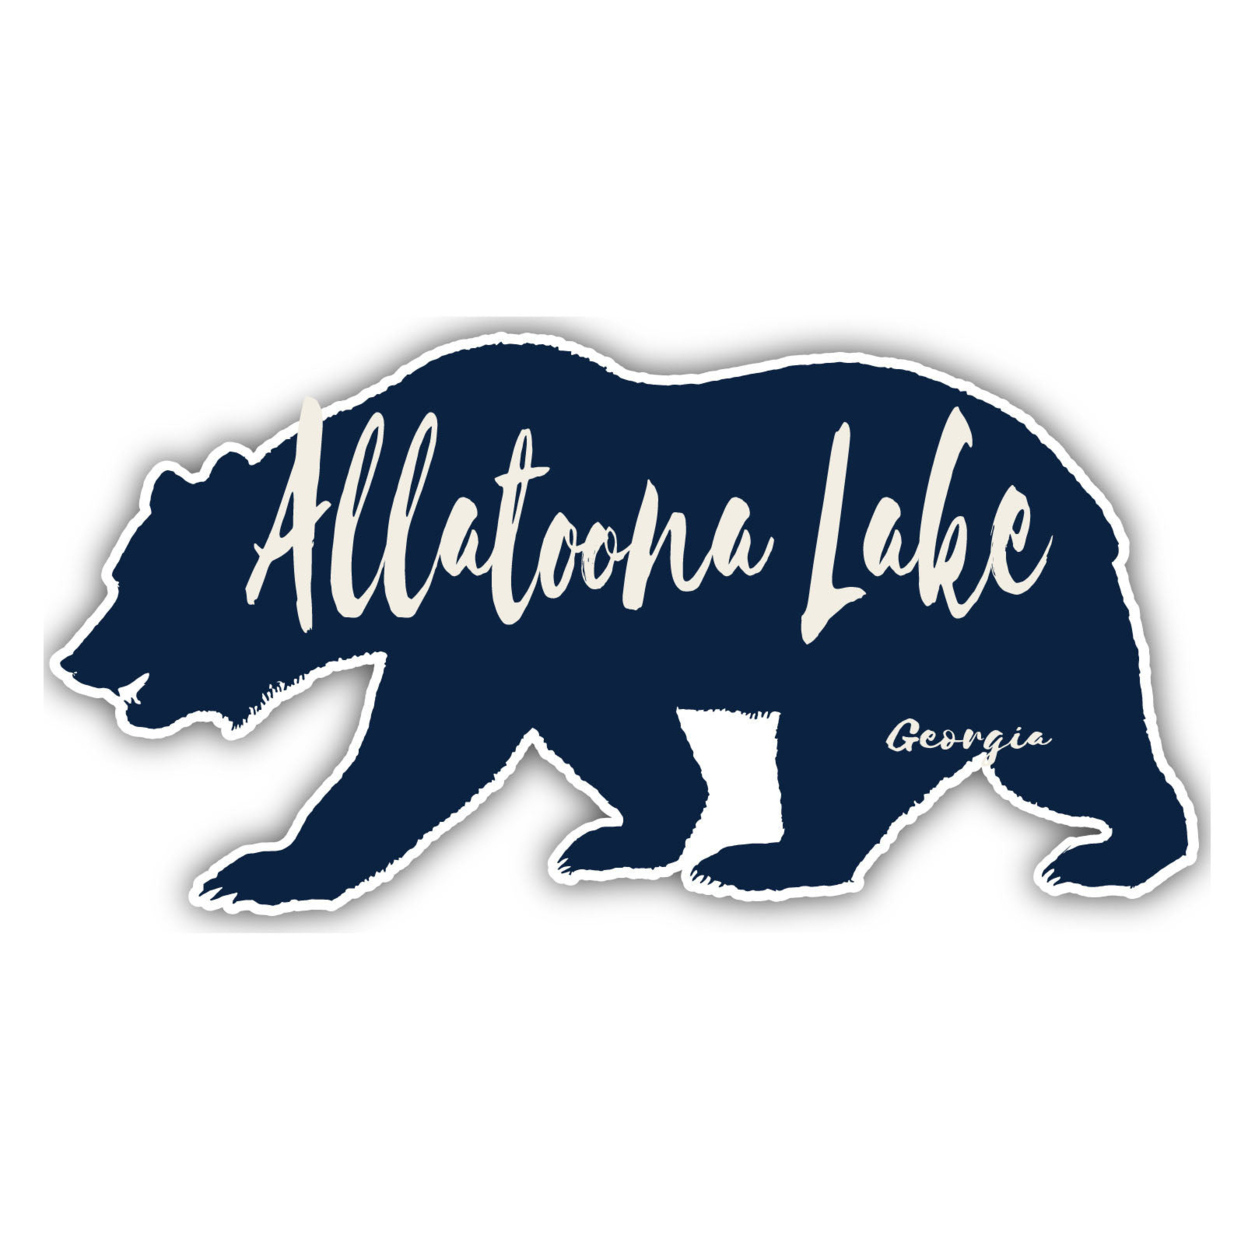 Allatoona Lake Georgia Souvenir Decorative Stickers (Choose Theme And Size) - 4-Pack, 12-Inch, Tent